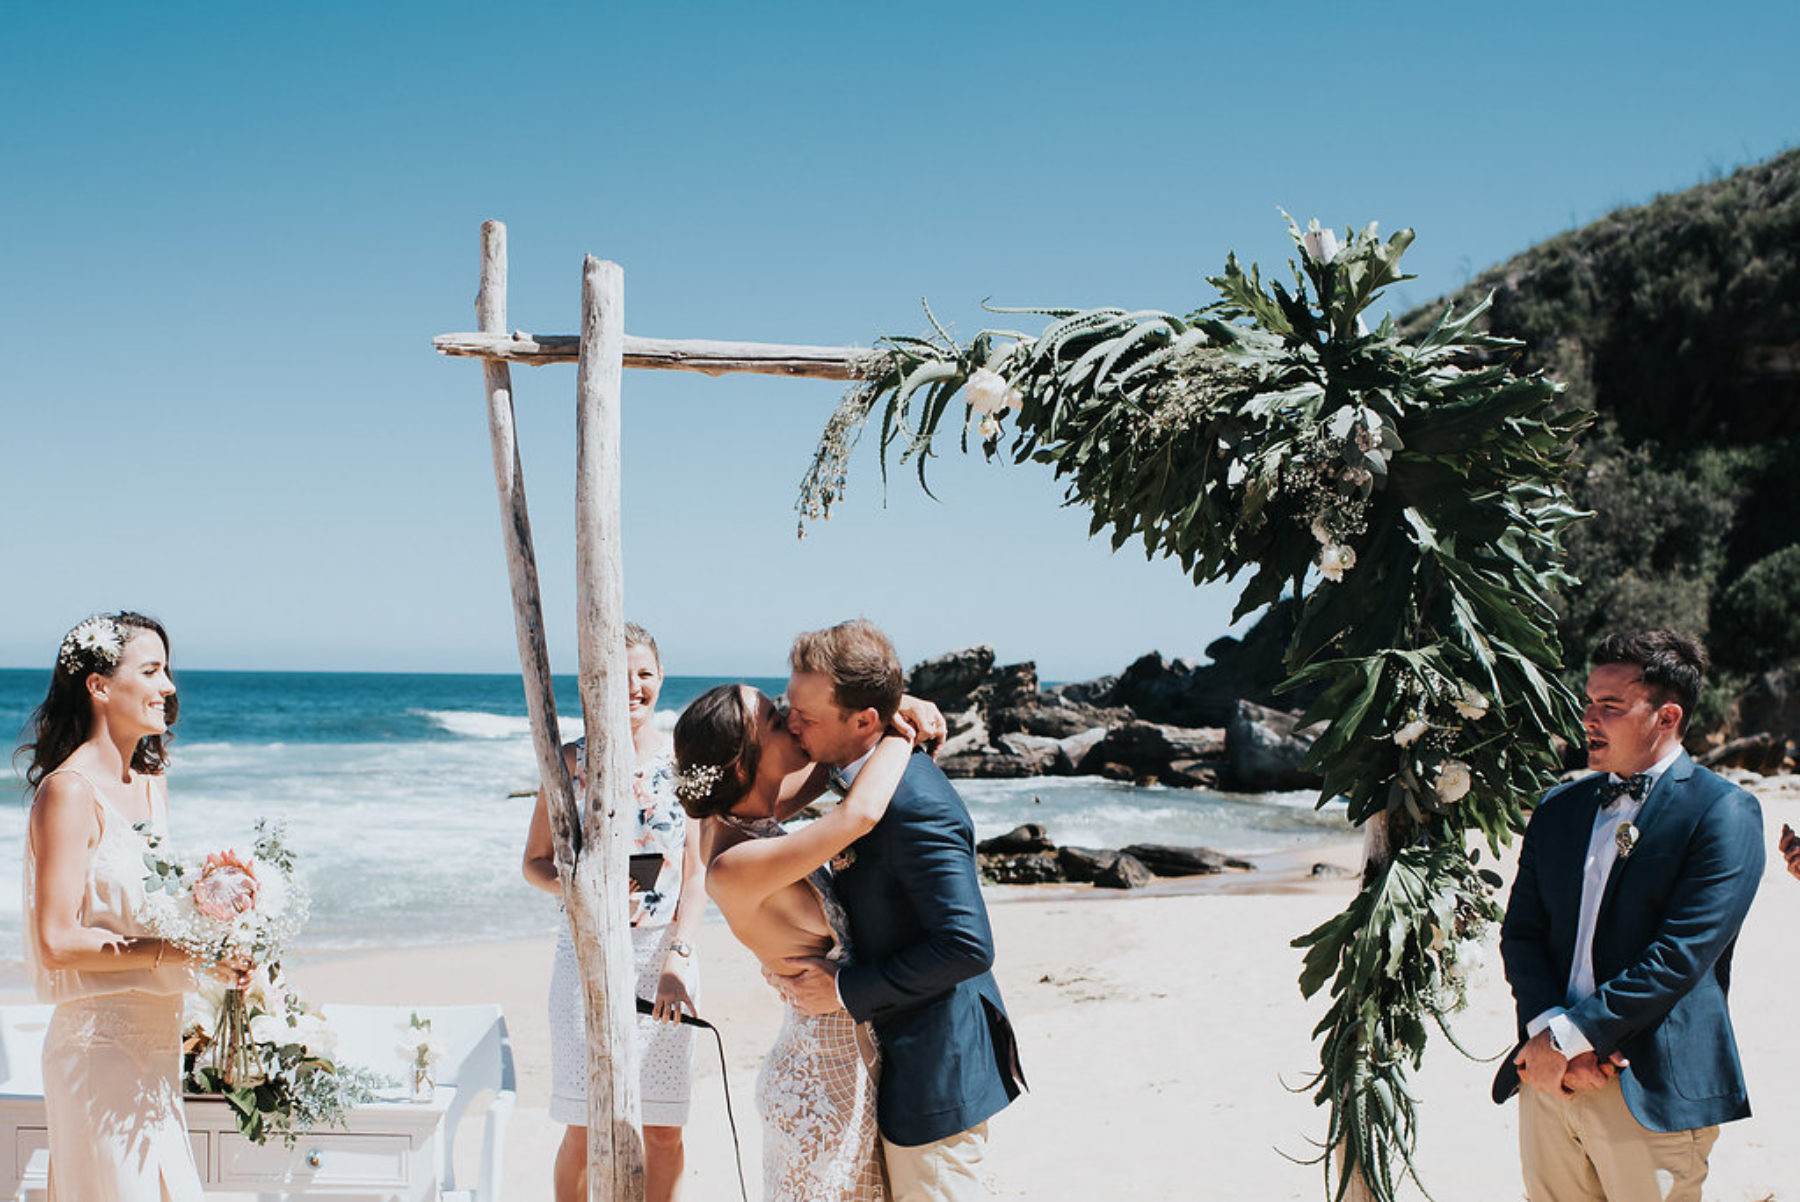 Planning a beach wedding